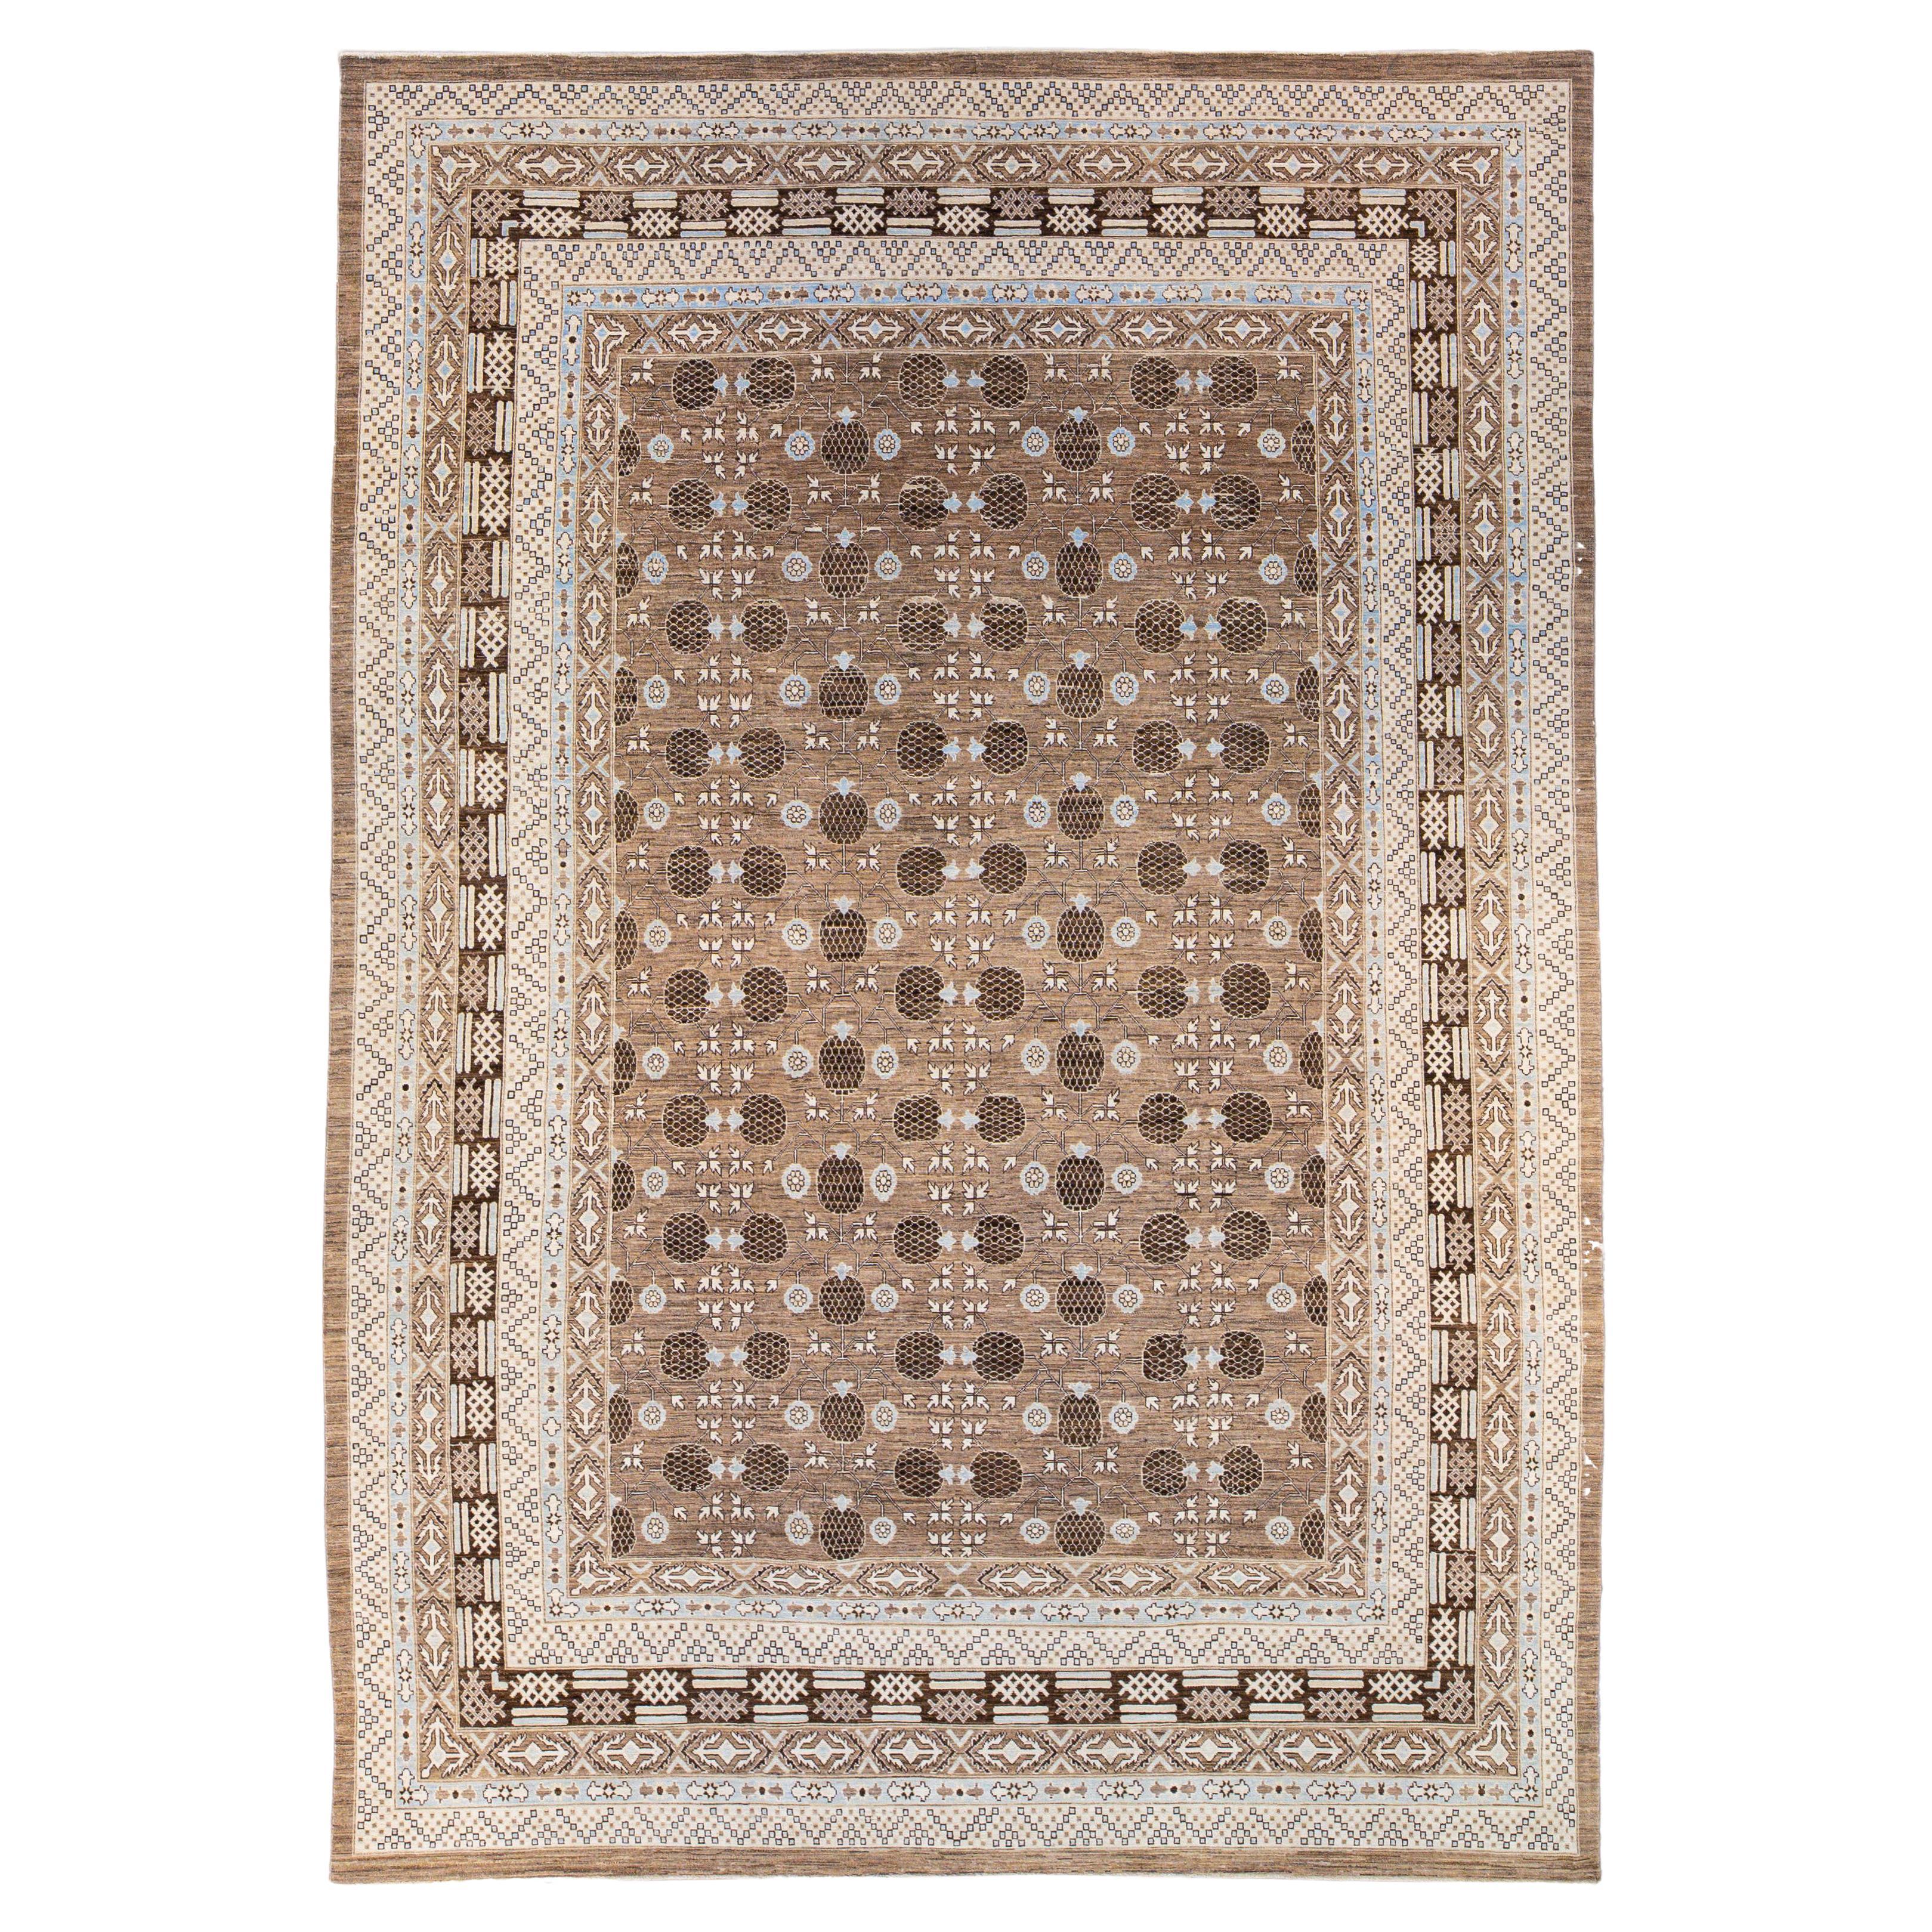 Modern Khotan Style Handmade Geometric Brown Oversize Wool Area Rug For Sale